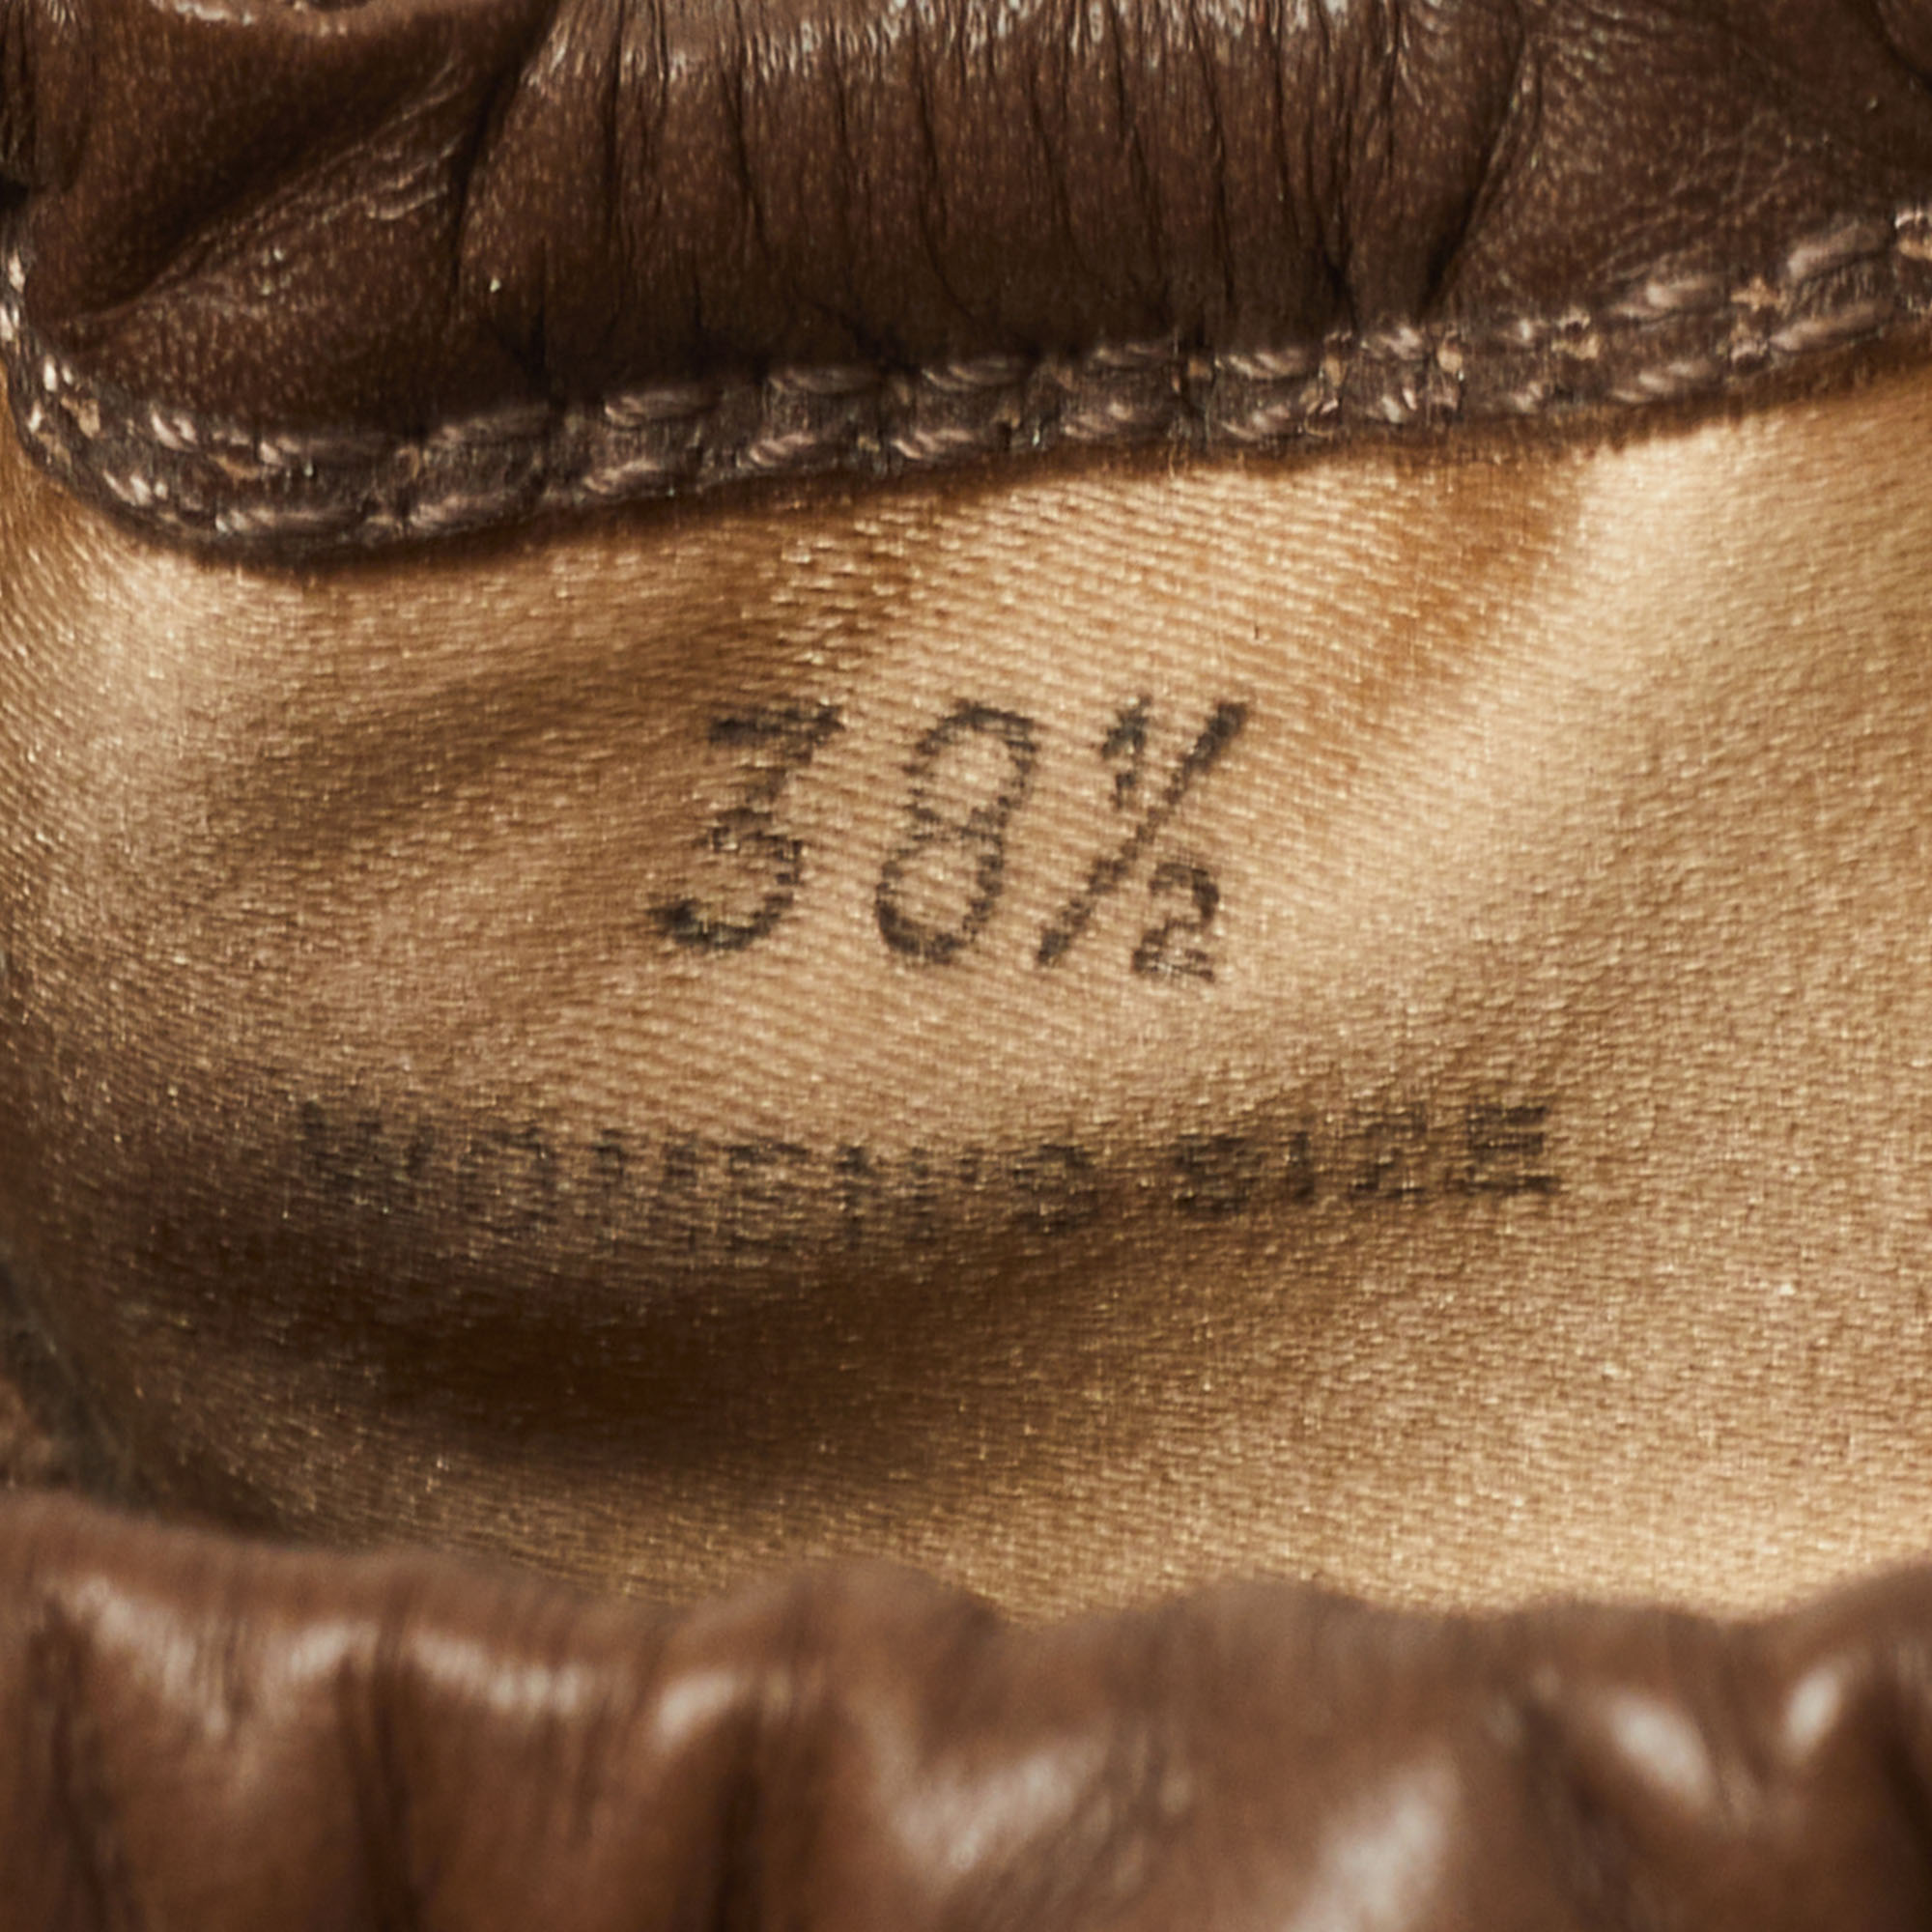 Tod's Brown/Metallic Leather Cap Toe Buckle Detail Scrunch Ballet Flats Size 38.5